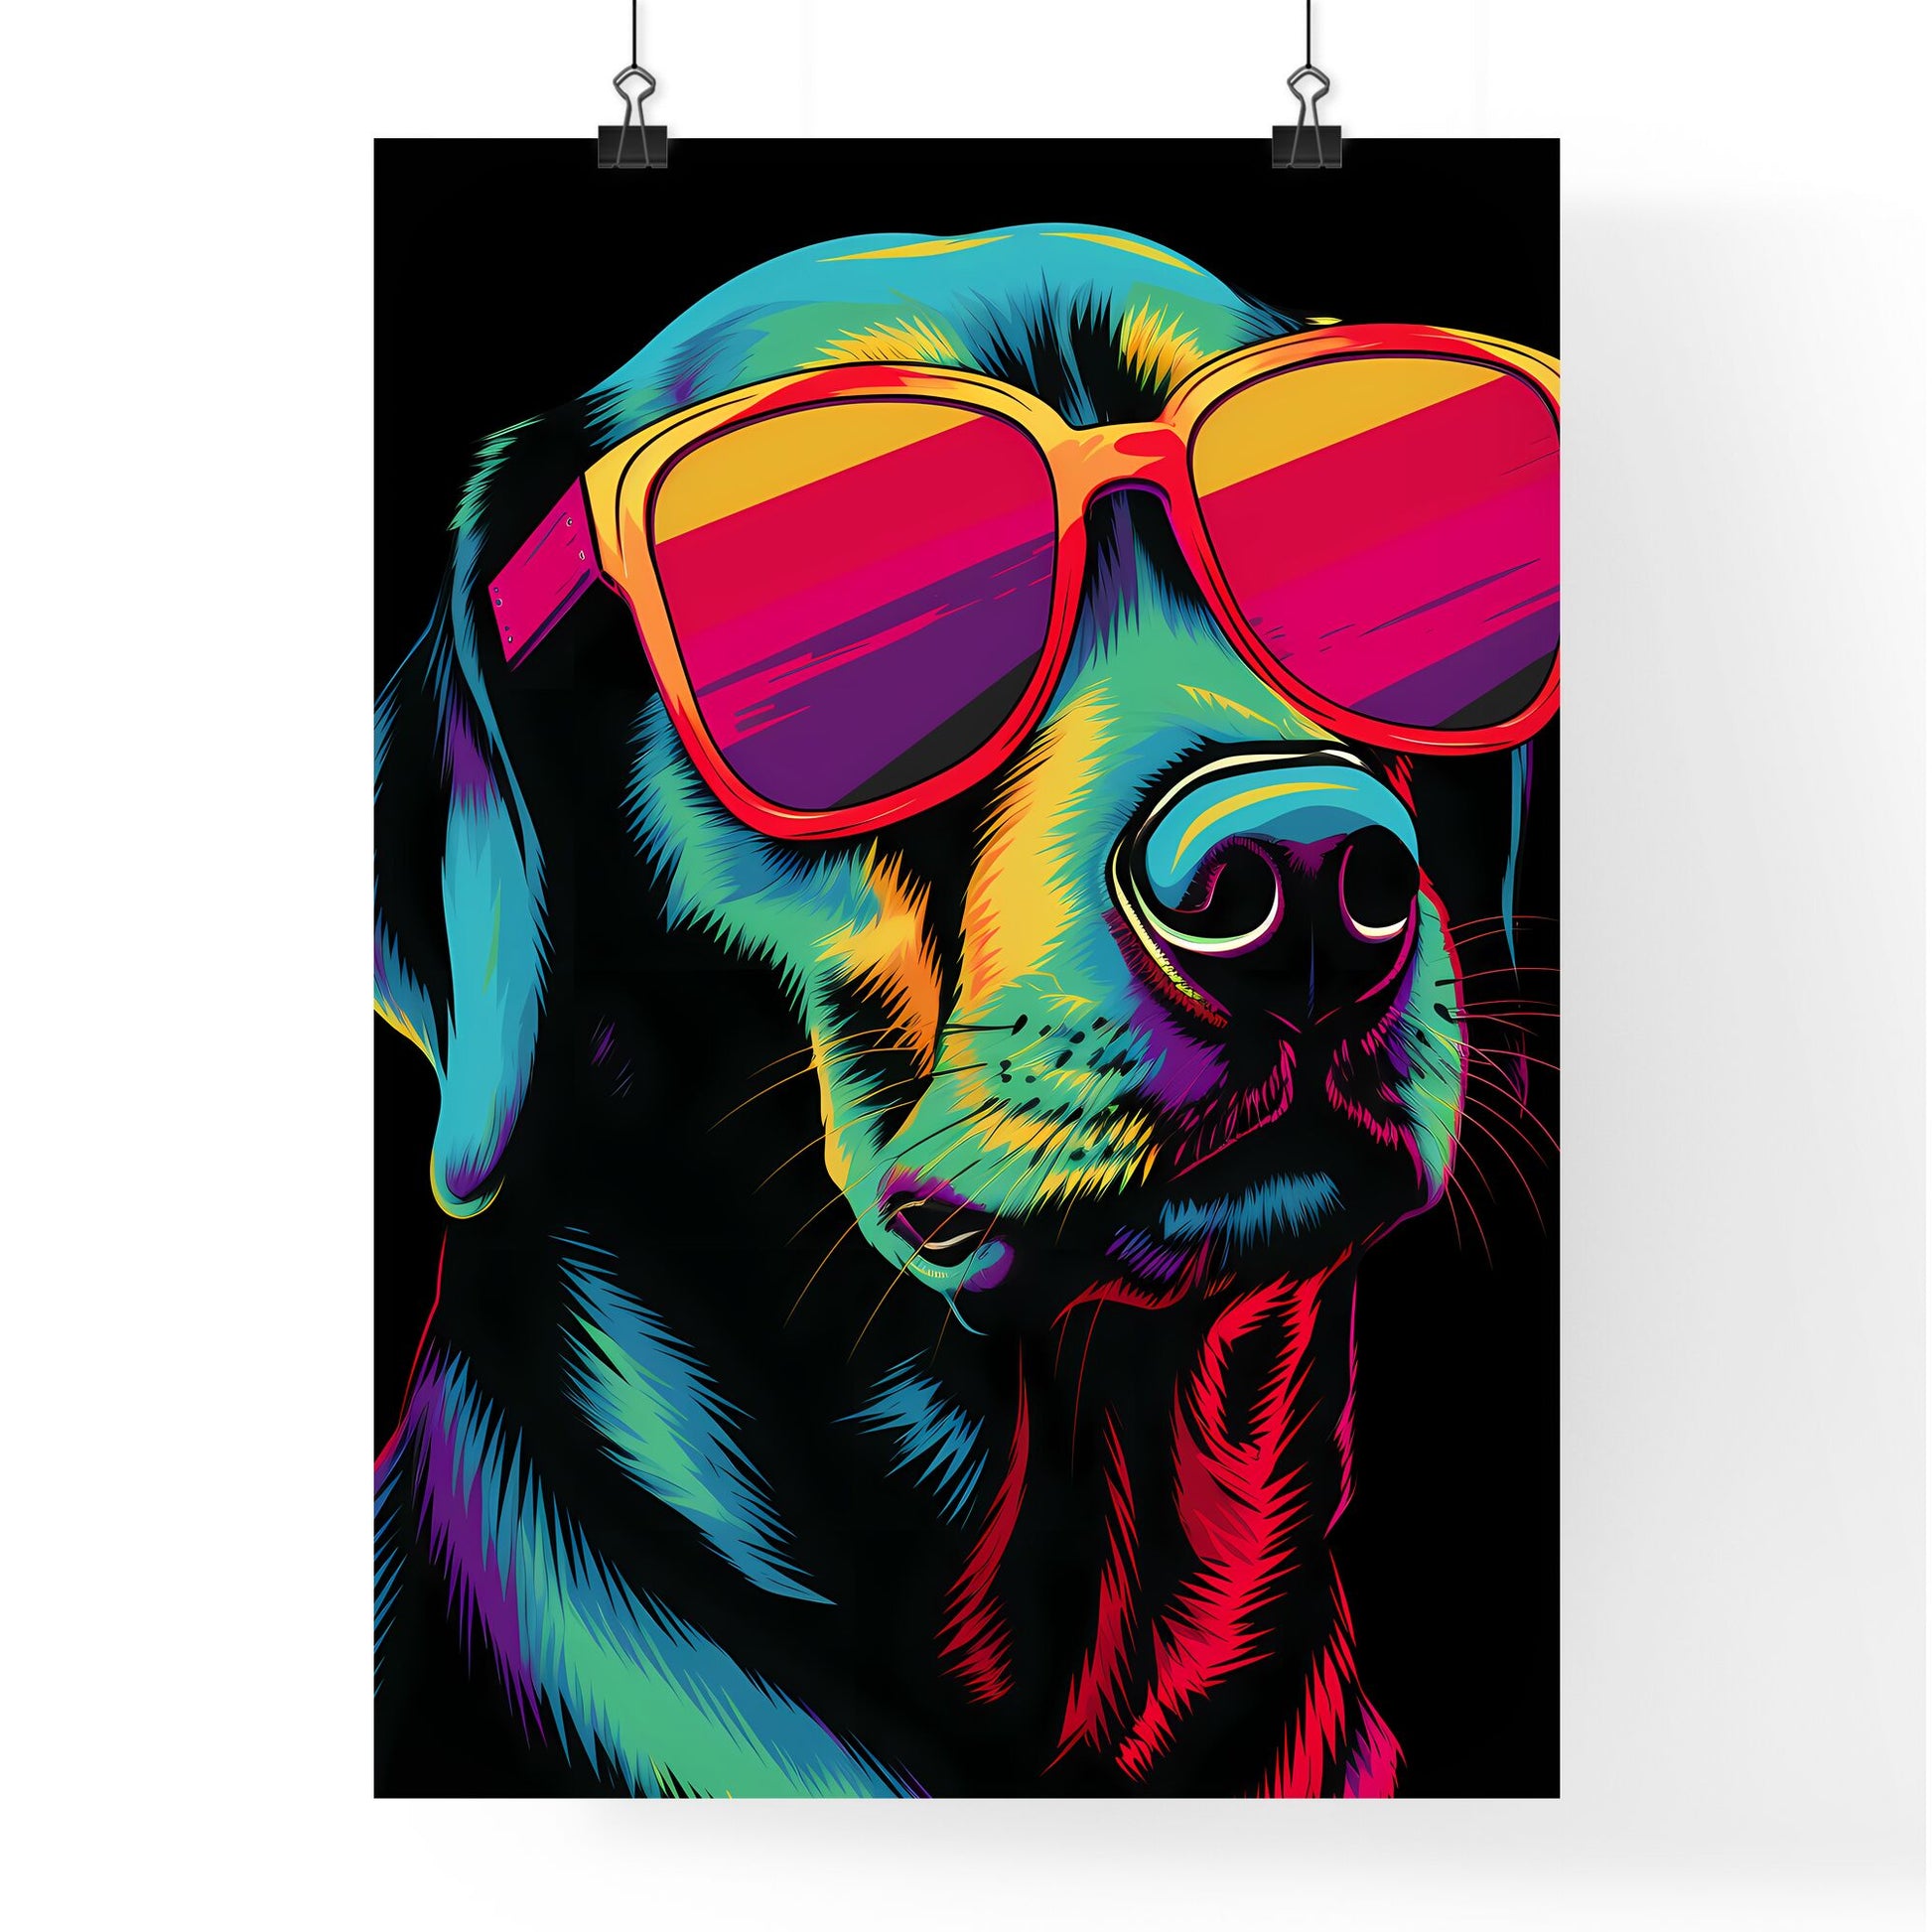 Swiss alpine dog vintage poster - Art print of a dog wearing sunglasses Default Title